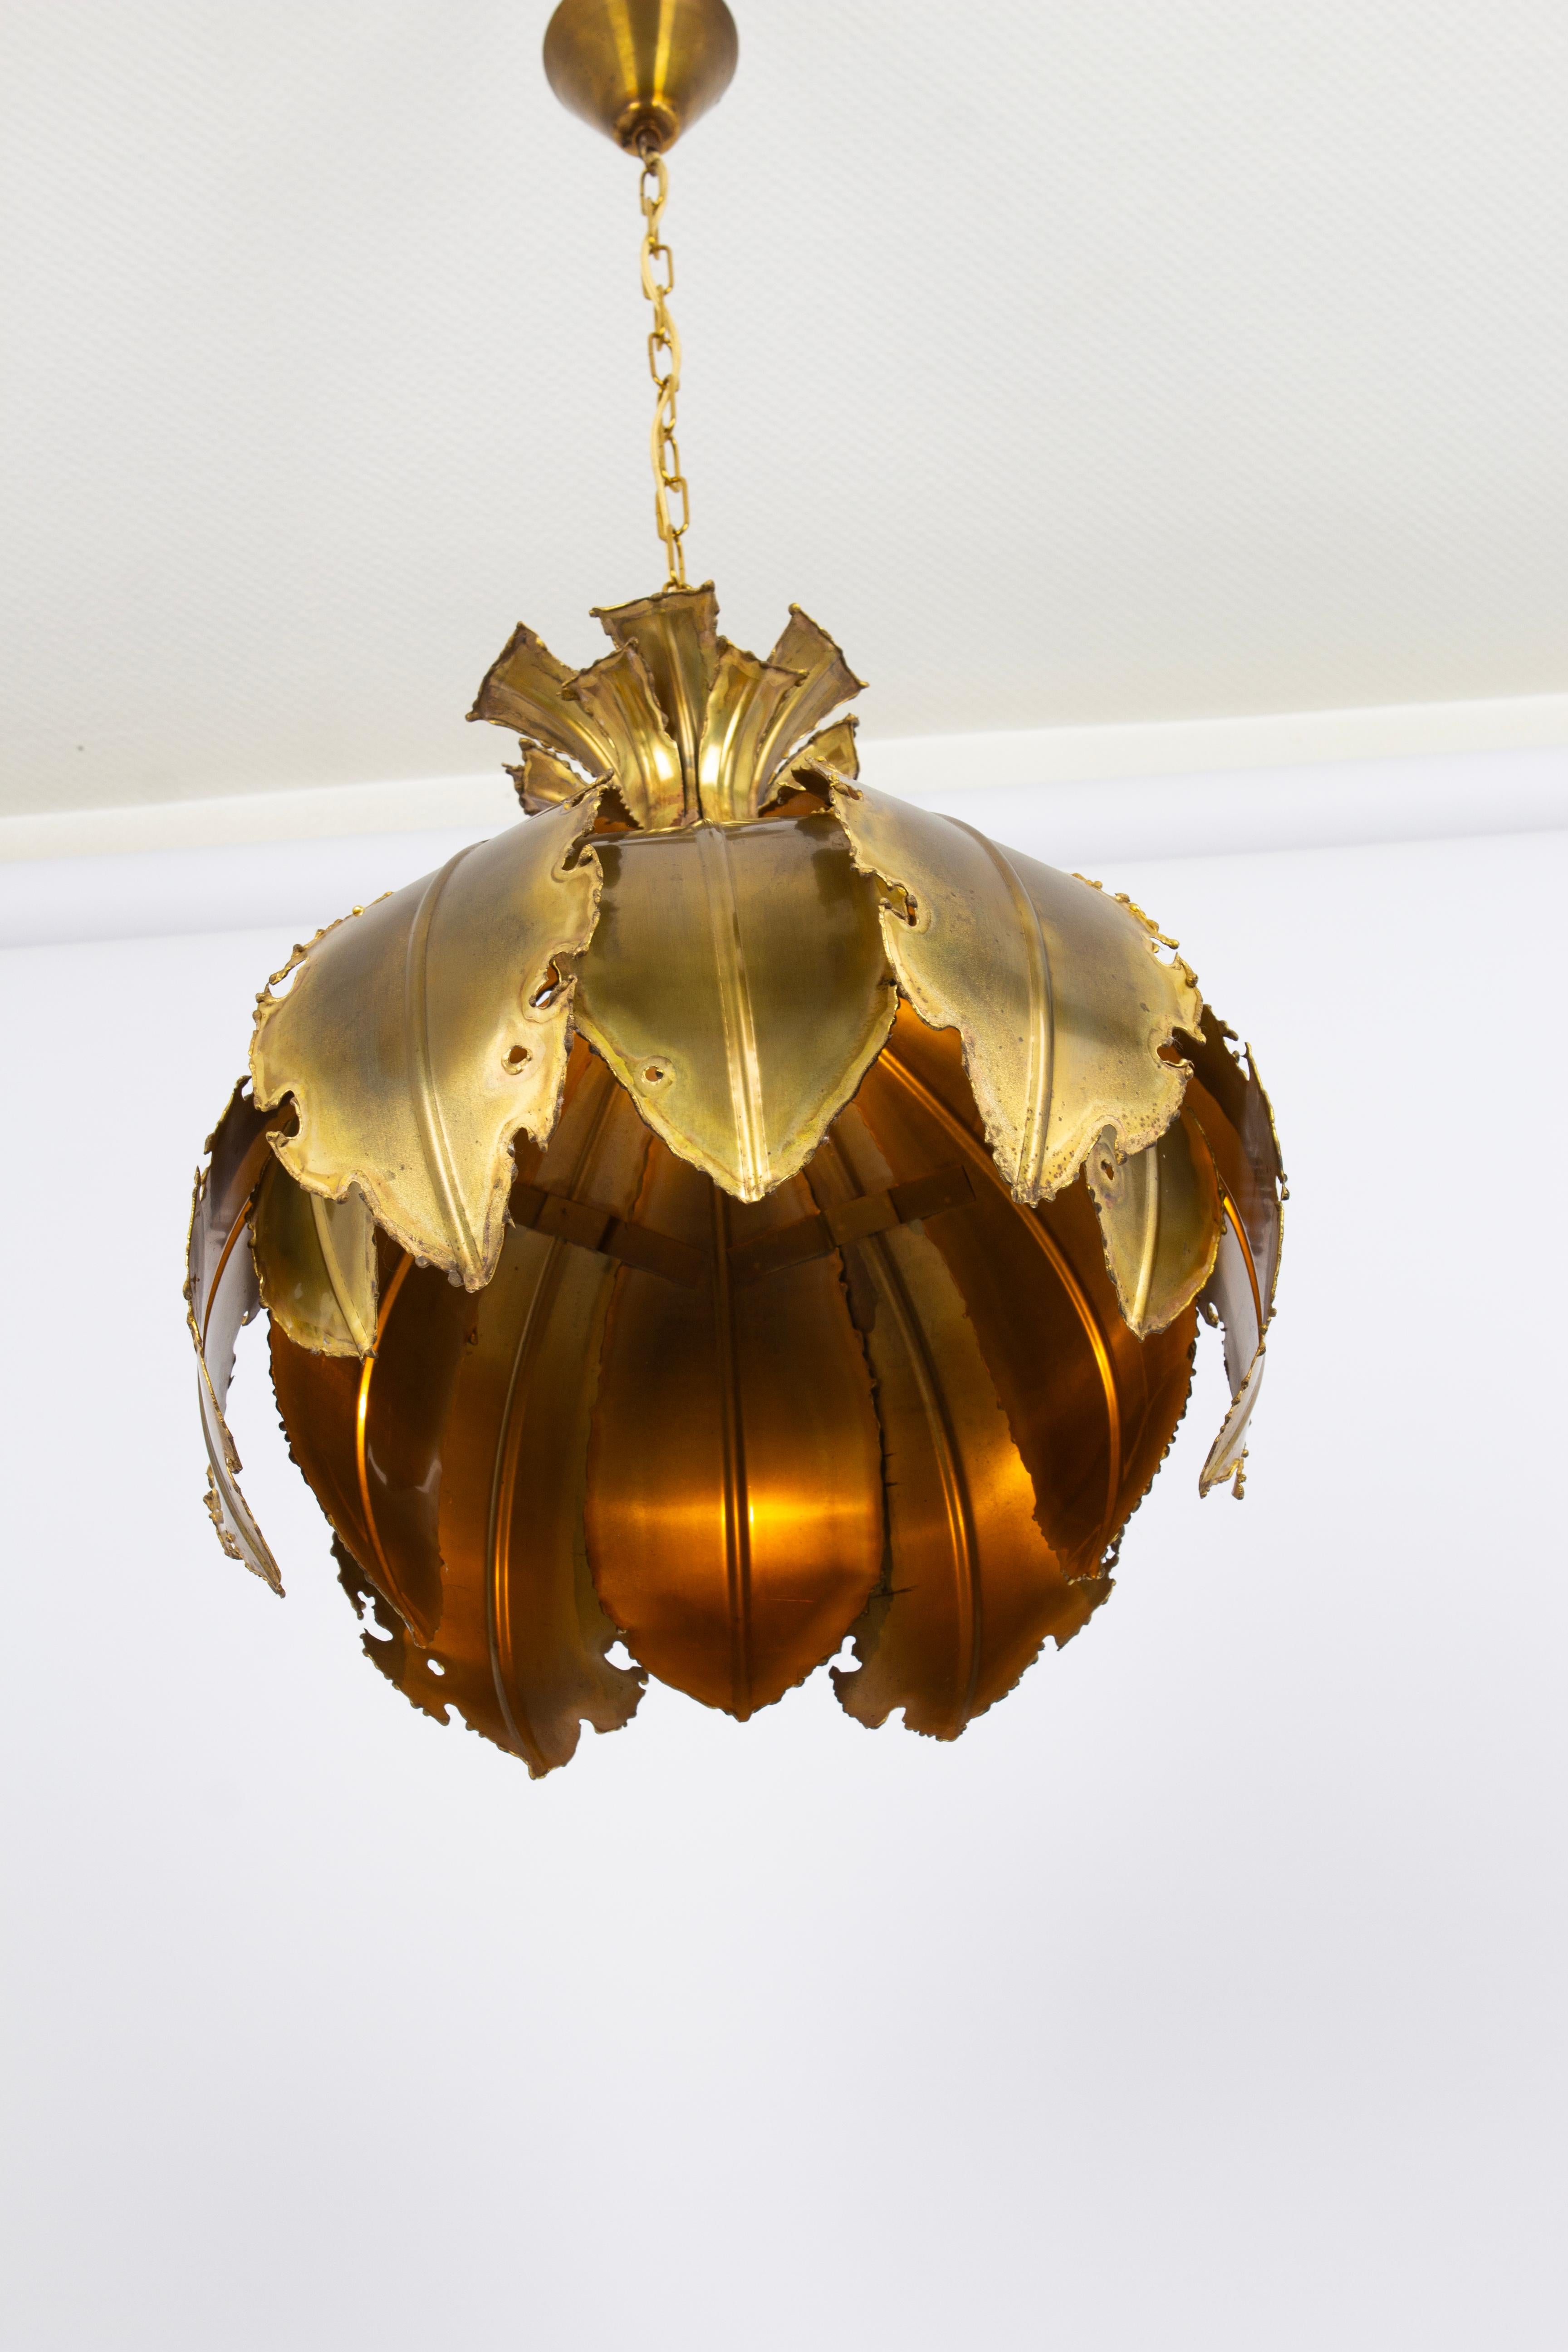 Laiton 1 of 5 Stunning Brass Pendants designed svend Aage Holm Sørensen, Denmark, 1960s (pendentifs en laiton) en vente